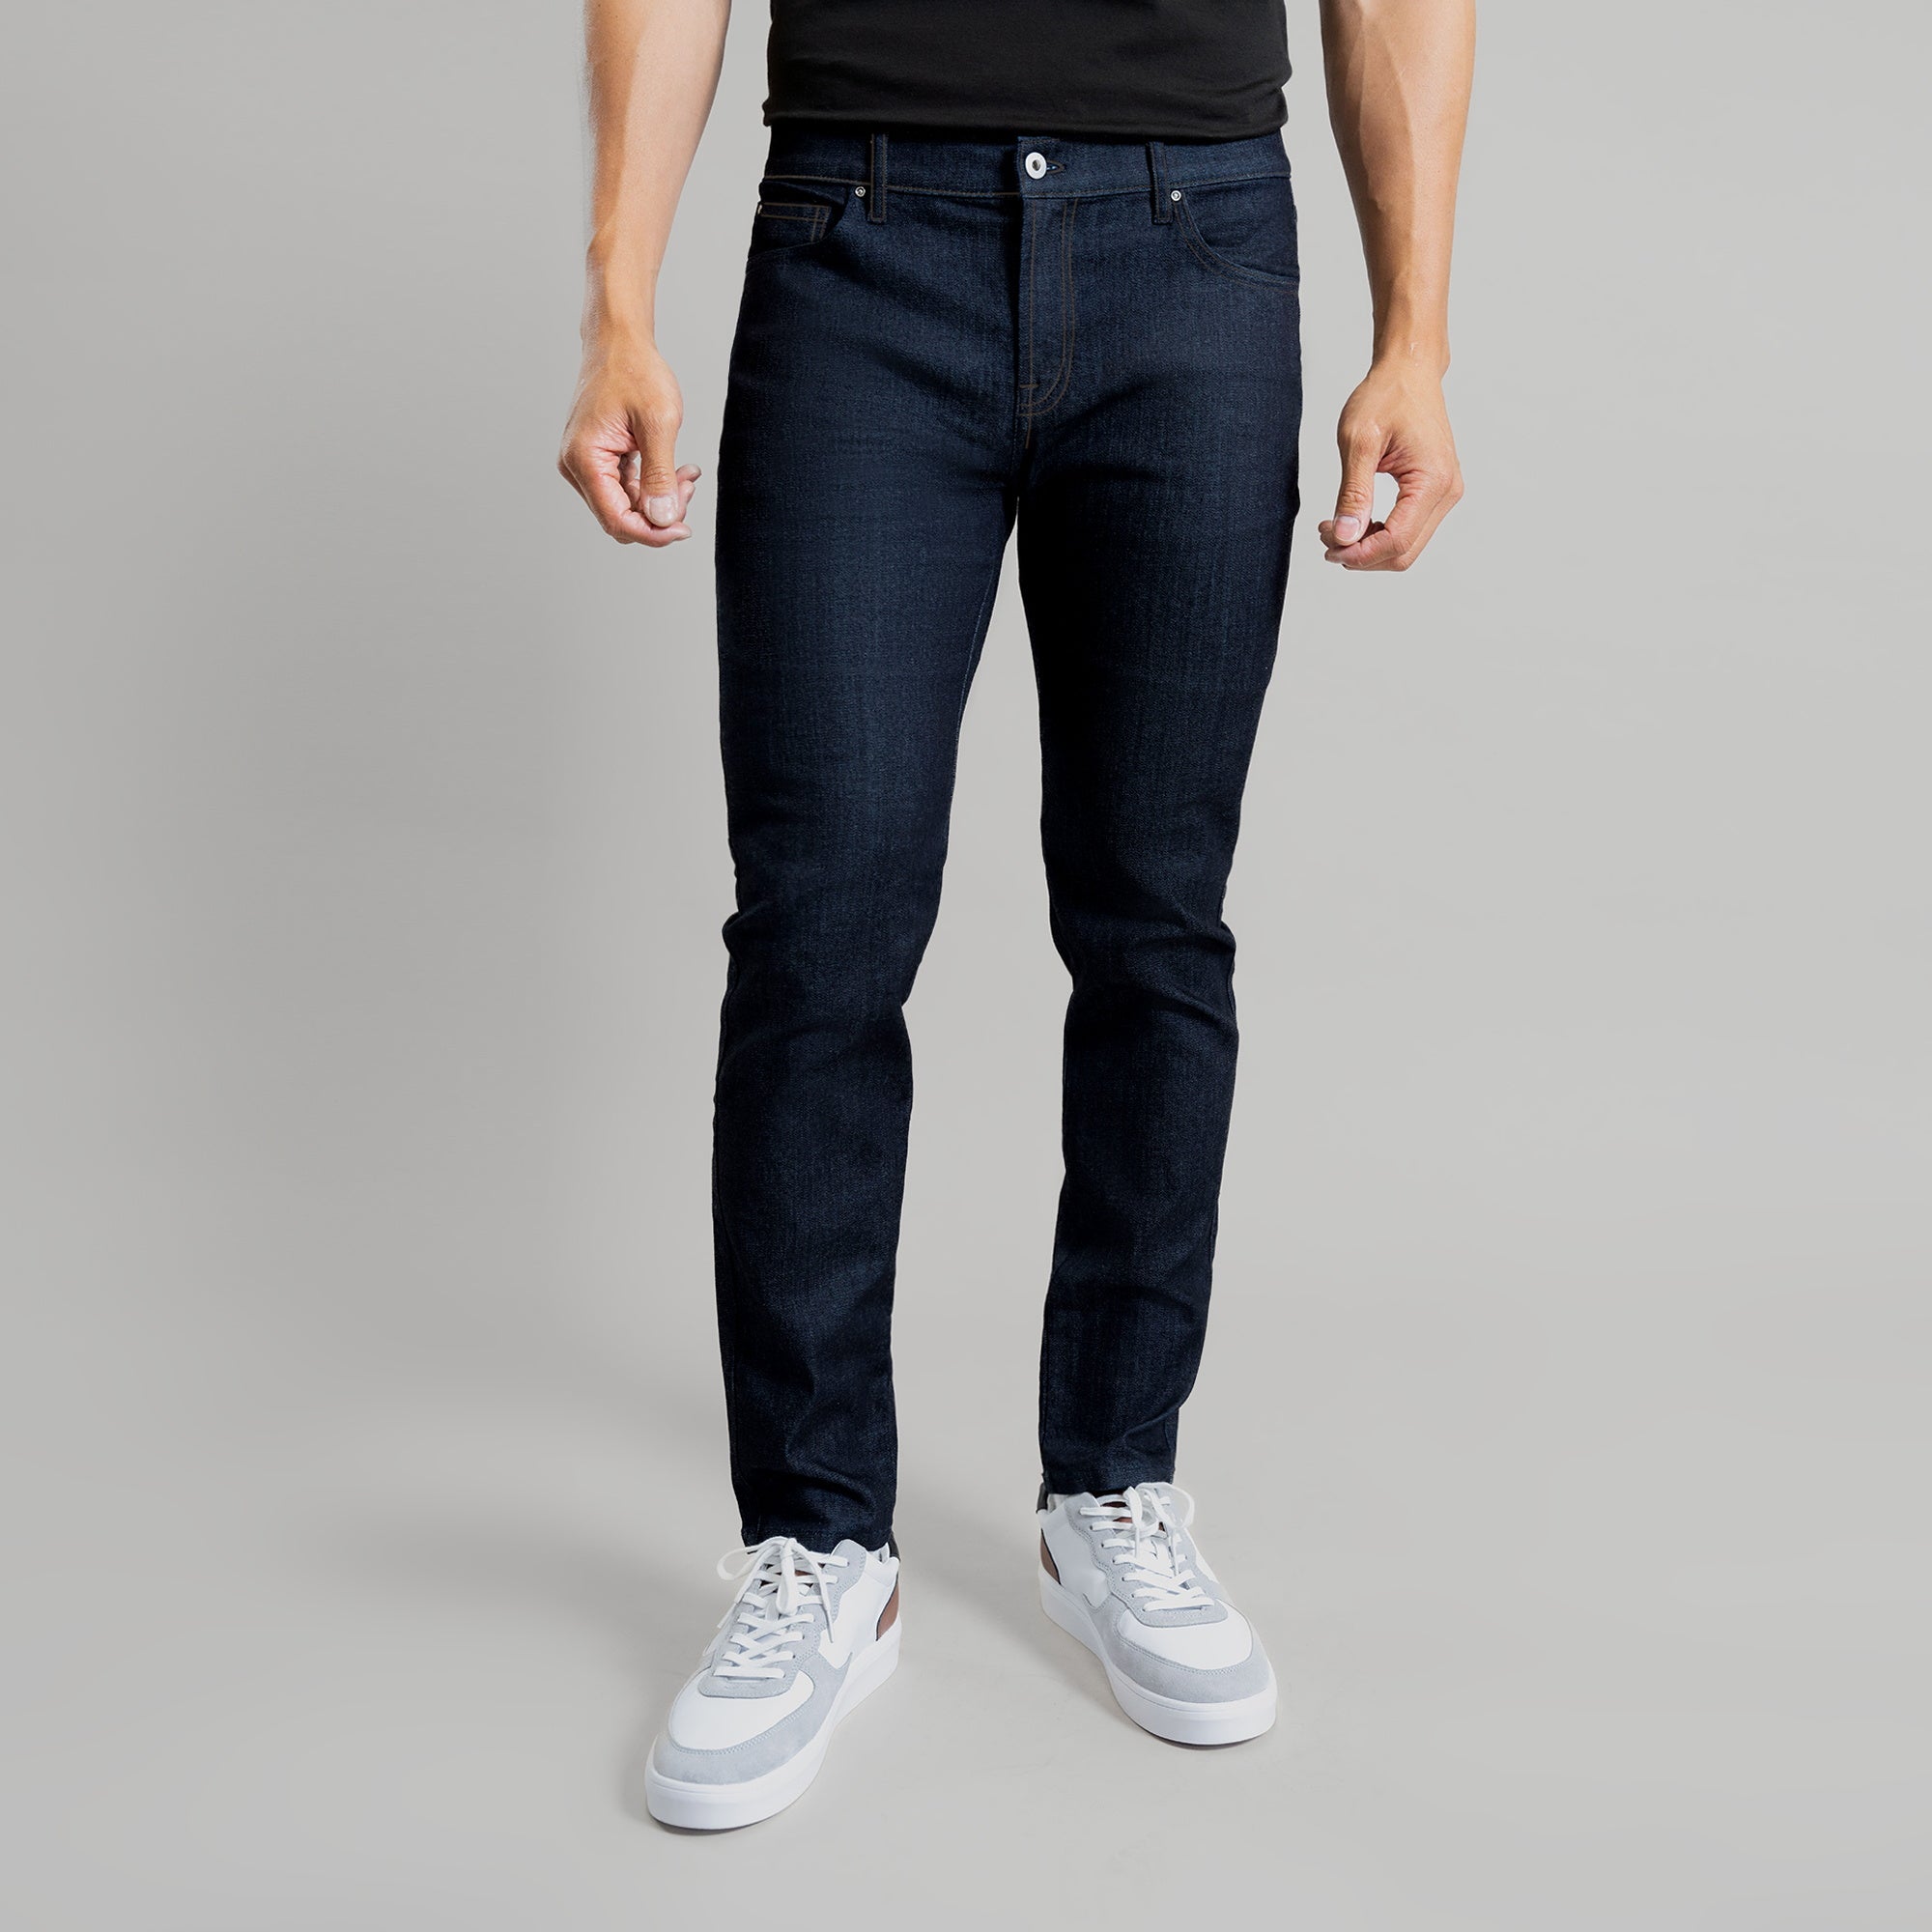 Sene - Sizeless Custom Clothing (Custom Jeans, Custom Suits)